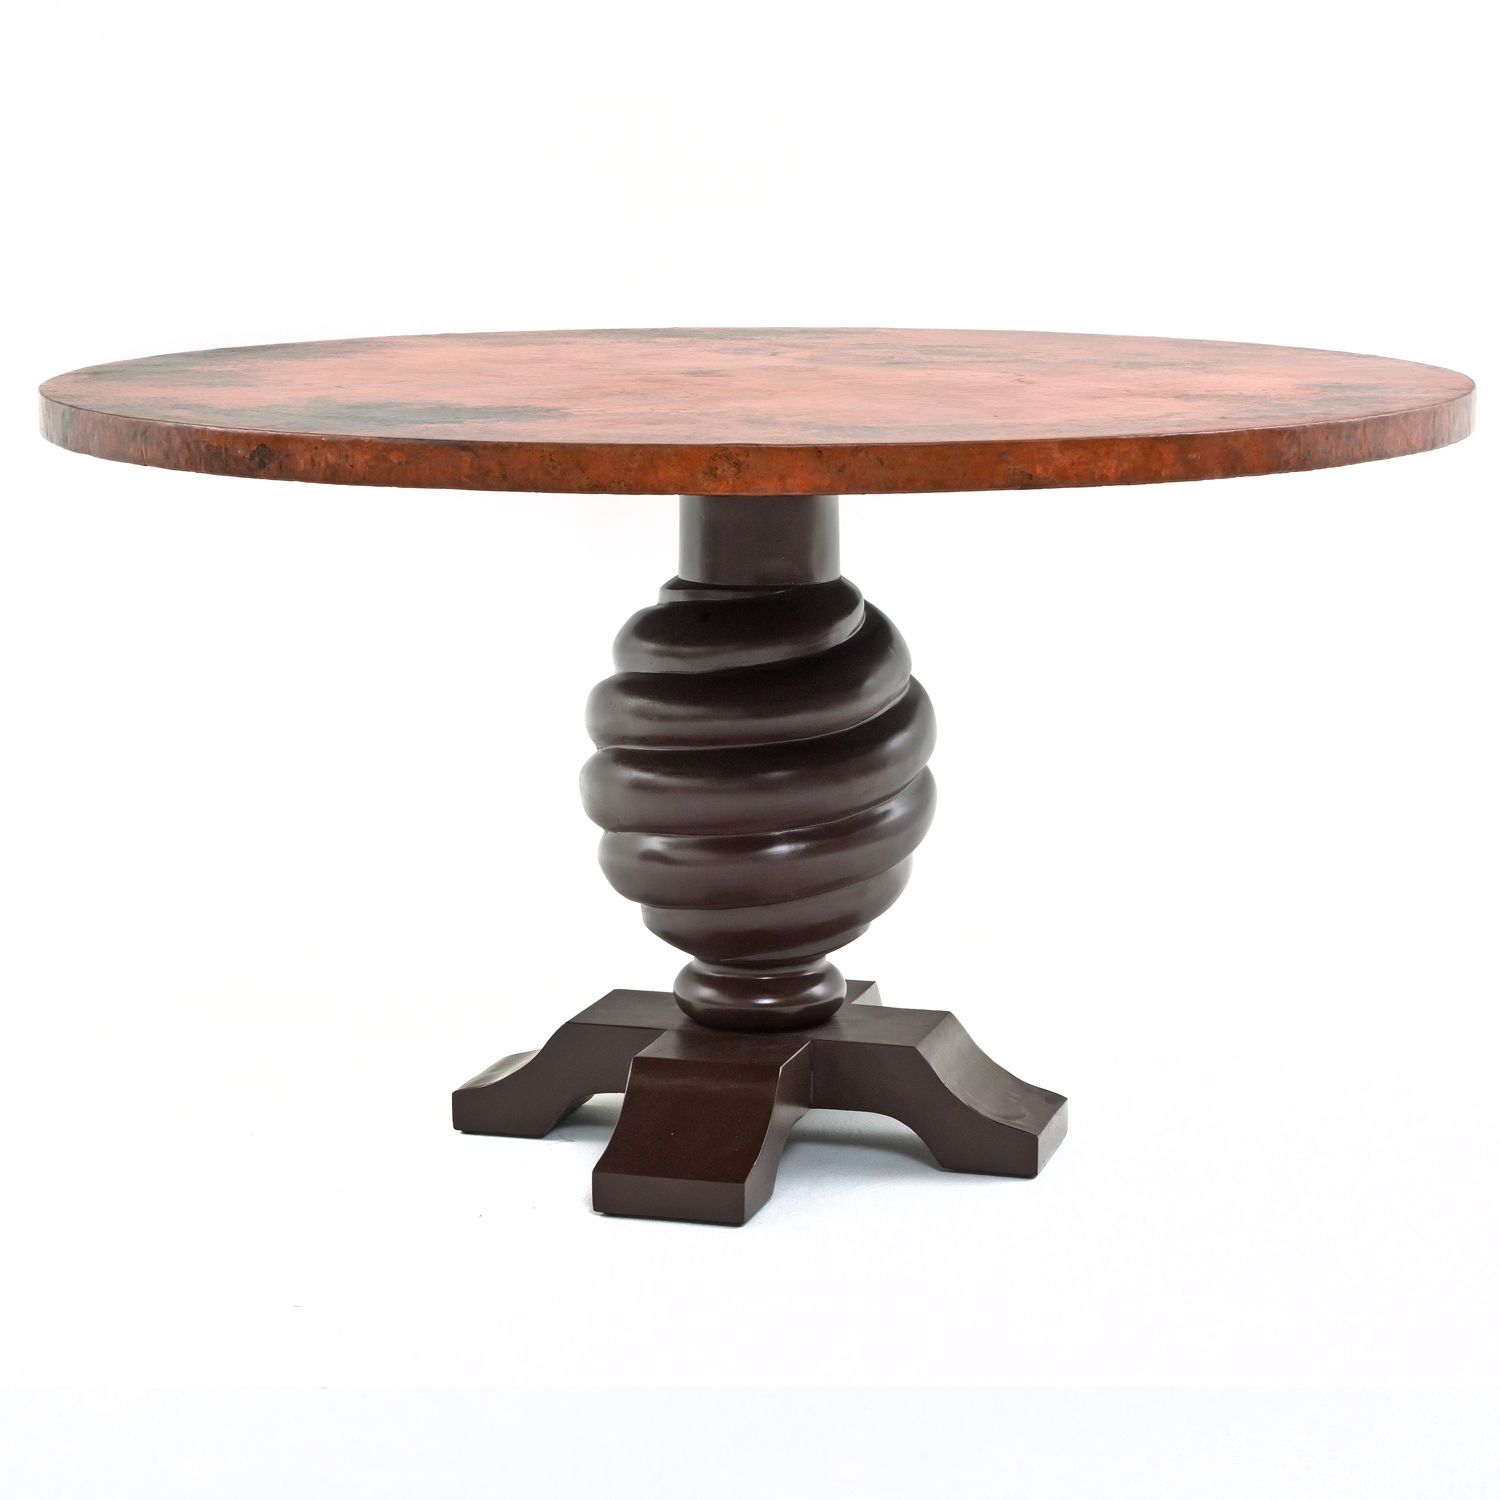 https://woodlandcreekfurniture.com/media/catalog/product/cache/1044726d93dd0fc5b52ac7ed430bb624/c/o/copper_round_pedestal_base_dining_table_1.jpg